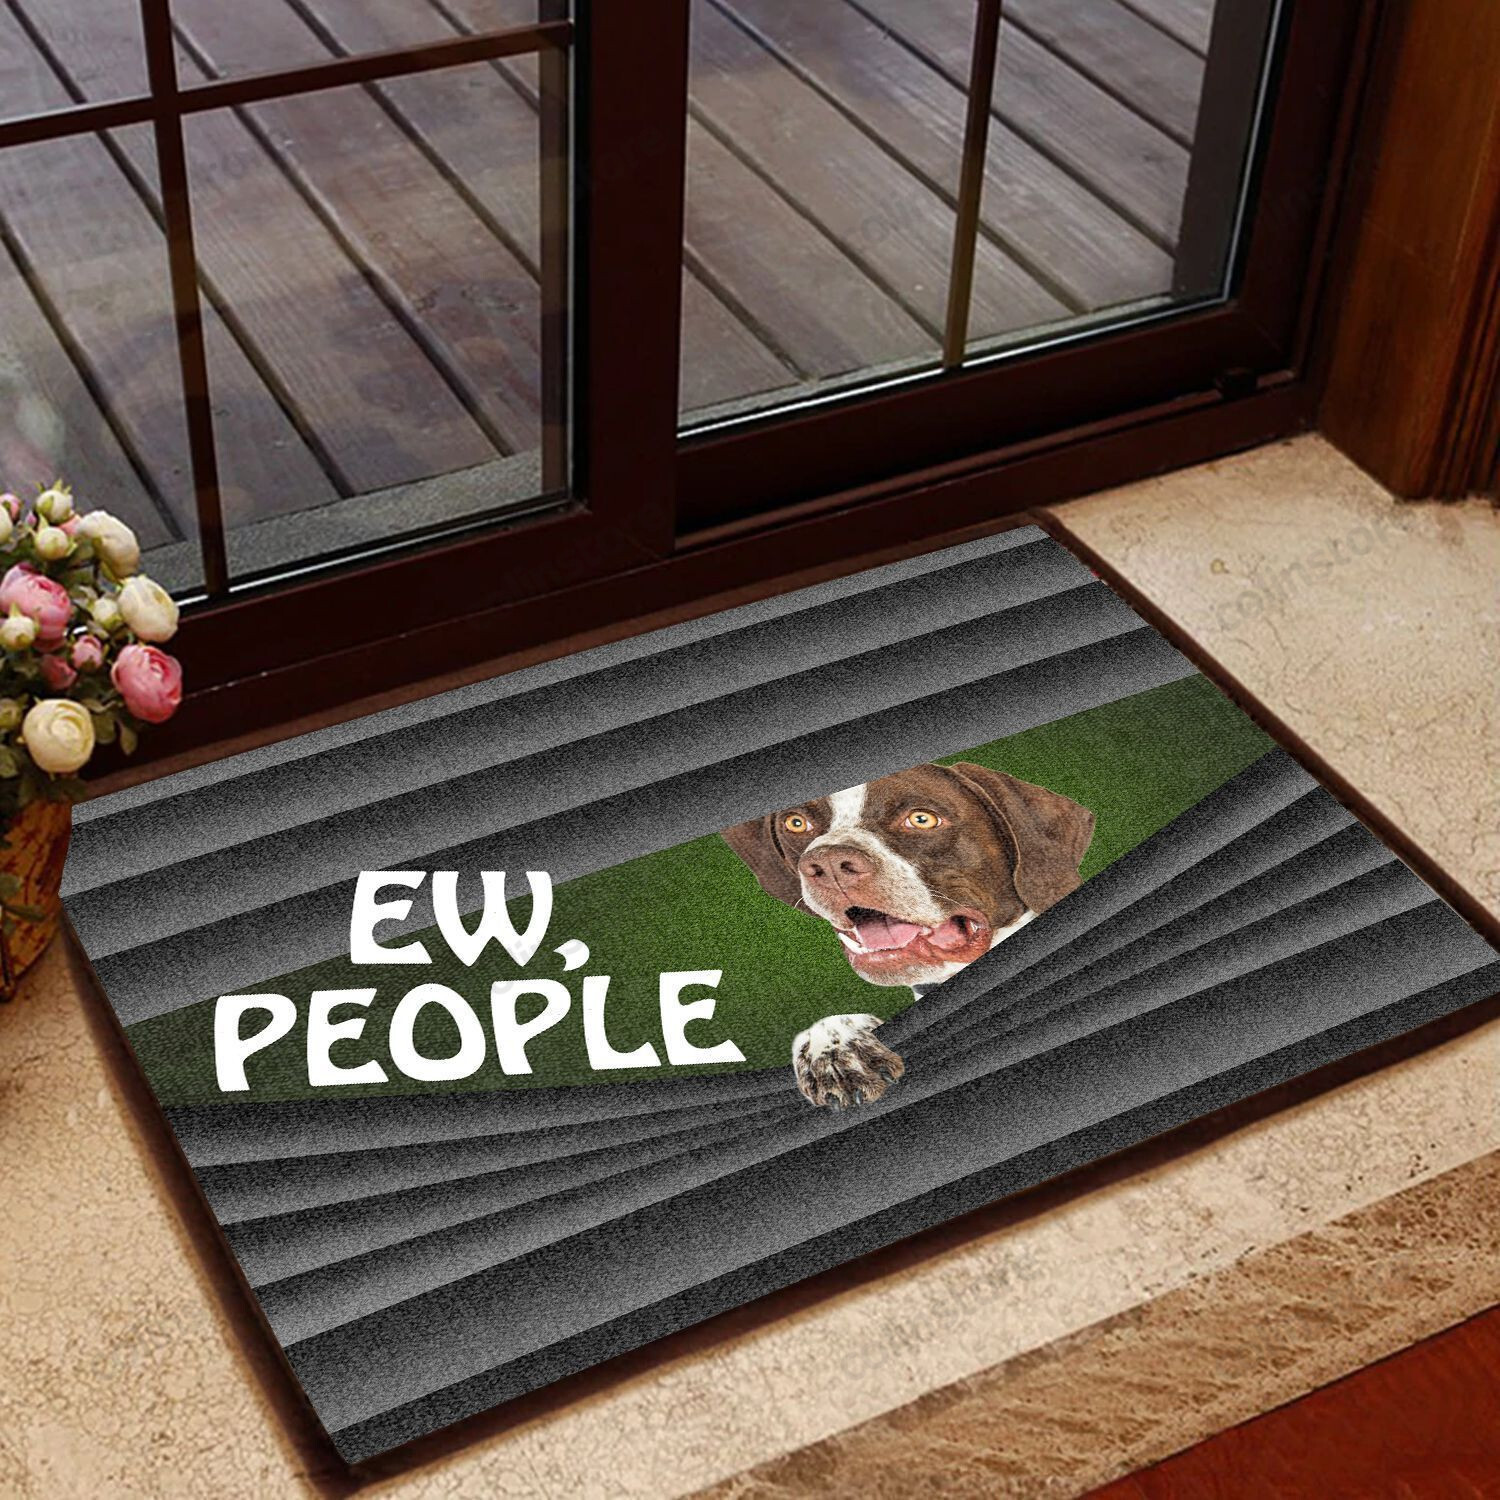 German Shorthaired Pointer Ew People - Dog Doormat Welcome Mat